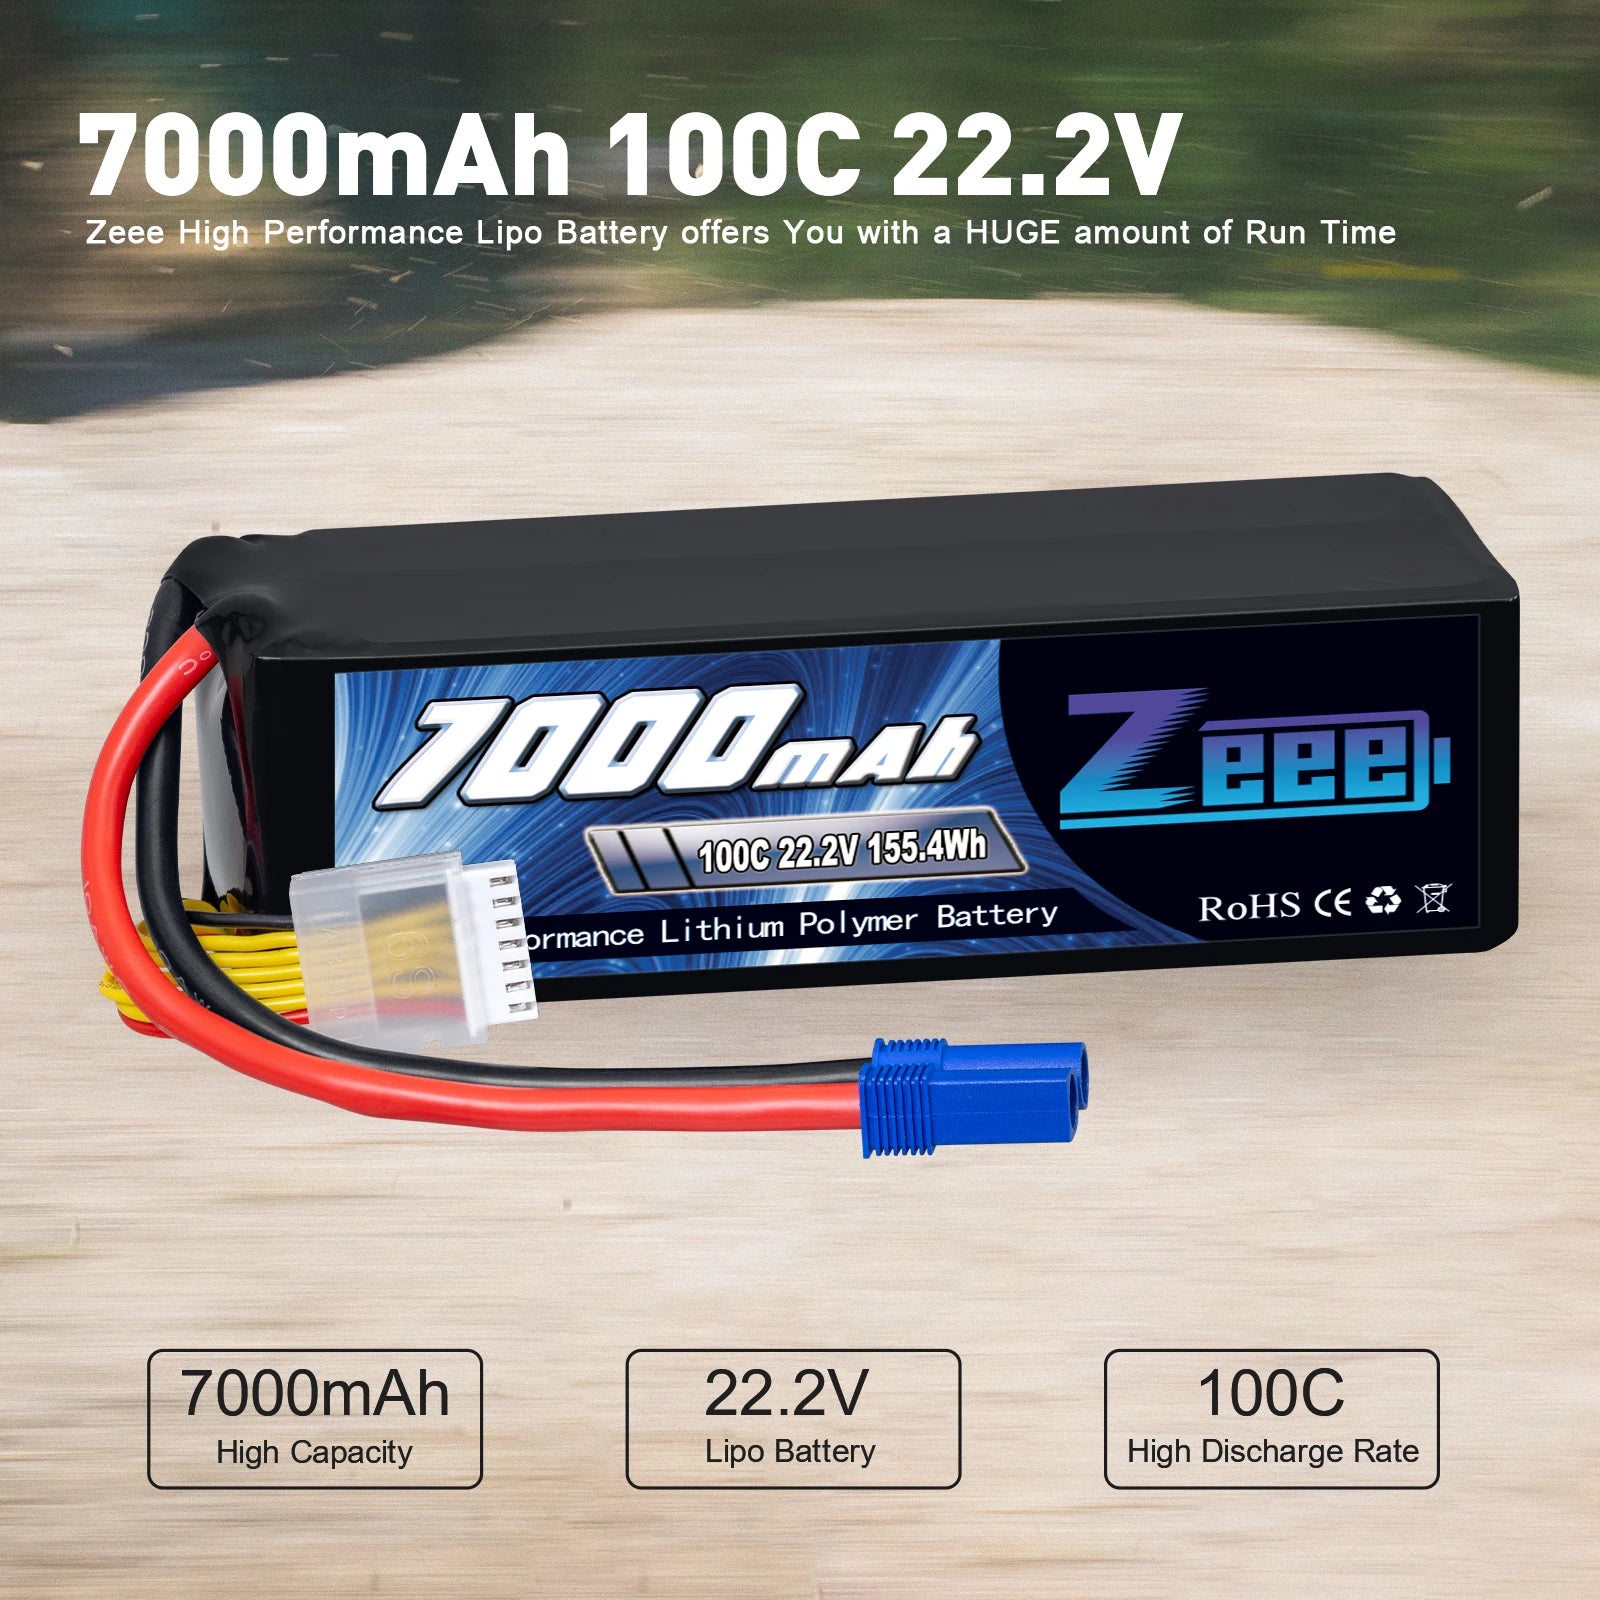 2Units Zeee Lipo Battery, qobbzat EB 100C22.2V4554Wh Li